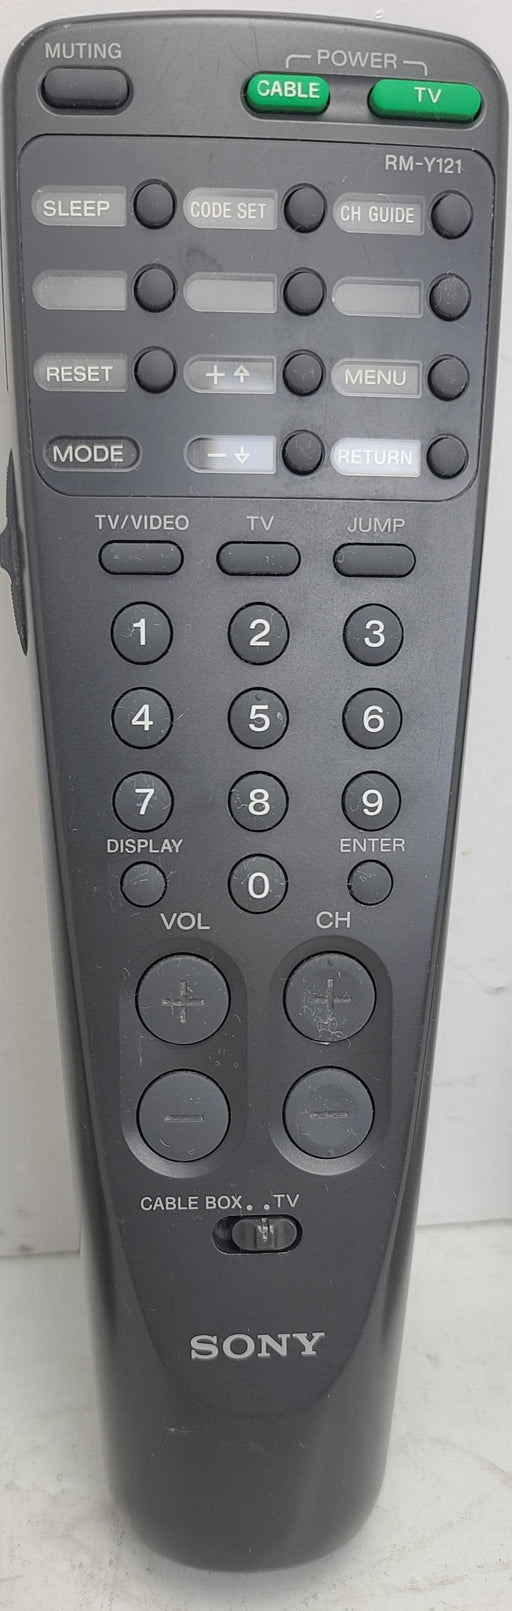 Sony UR64EC1487 Cable TV Remote Control-Remote-SpenCertified-refurbished-vintage-electonics